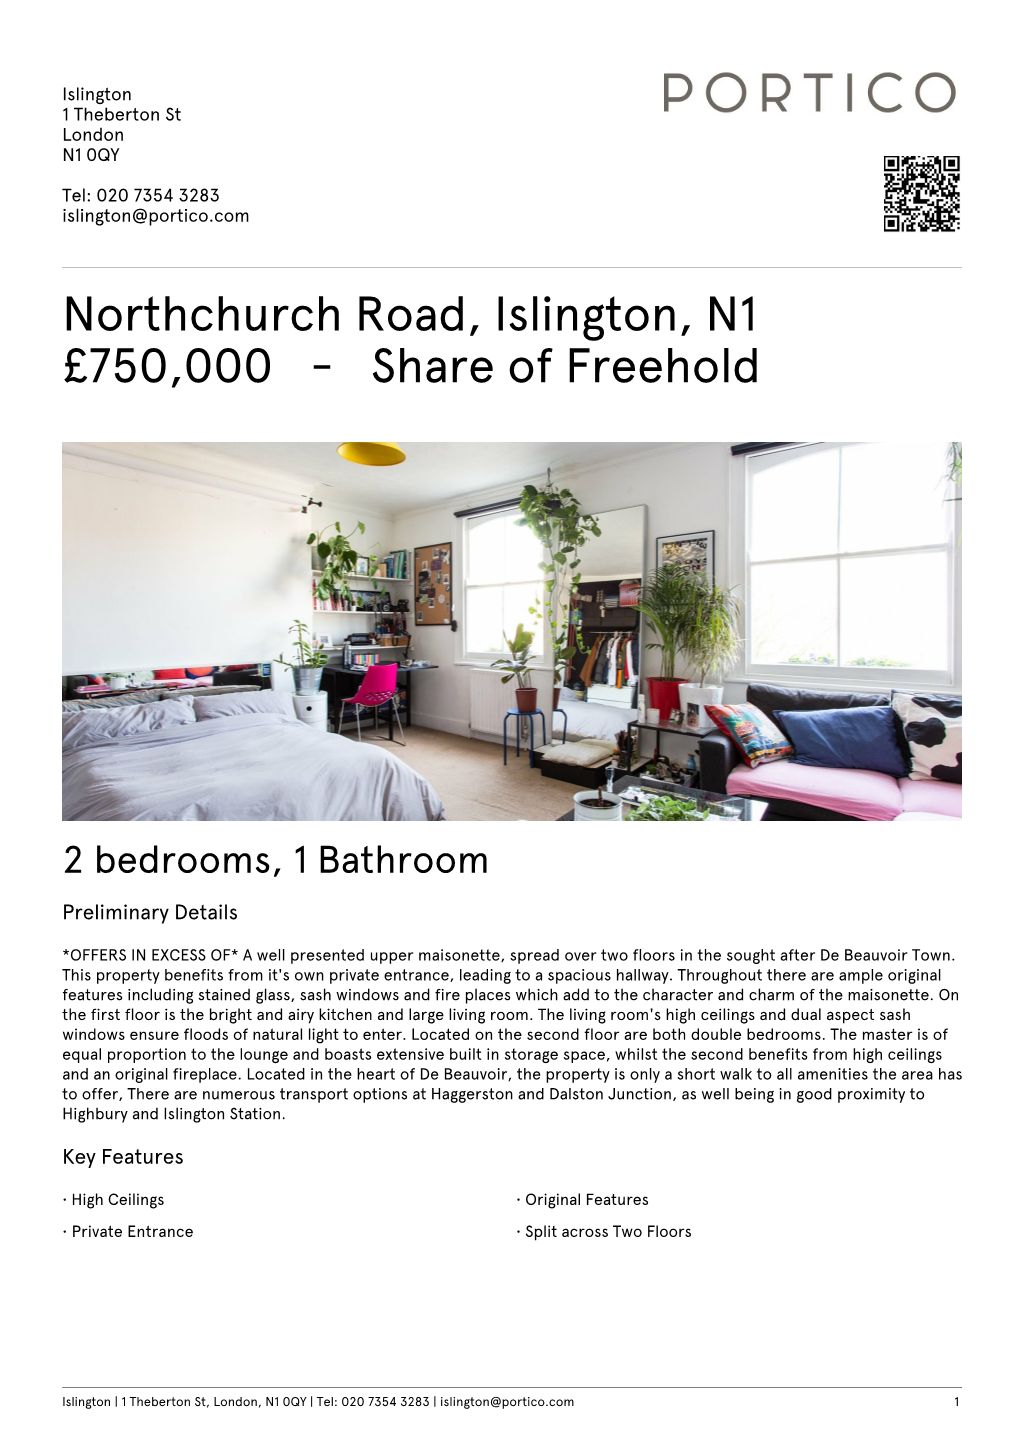 Northchurch Road, Islington, N1 £750,000